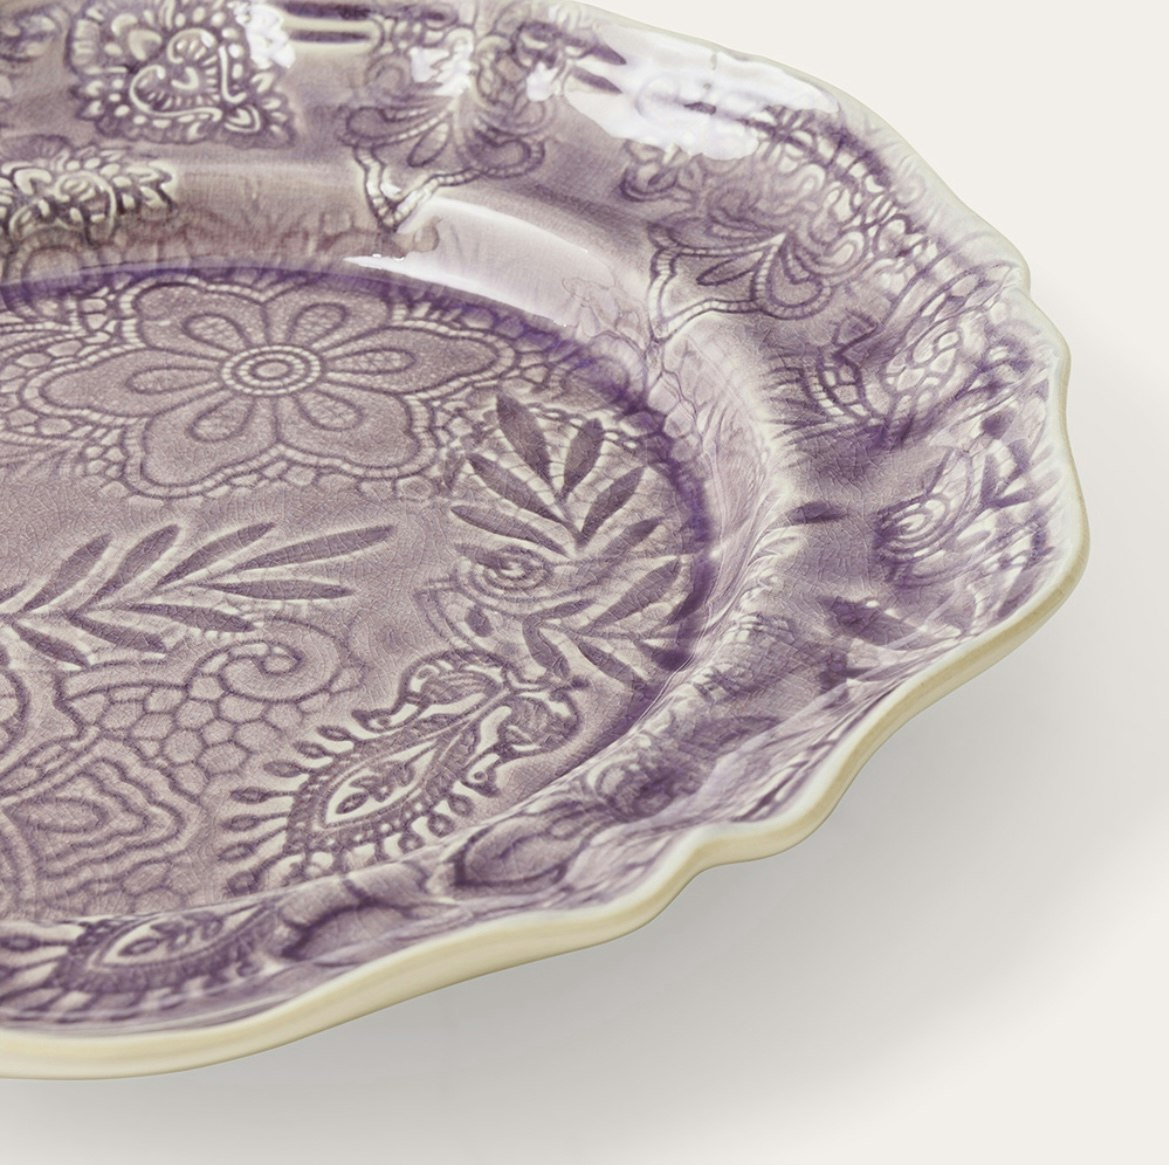 Large round dish, lavender